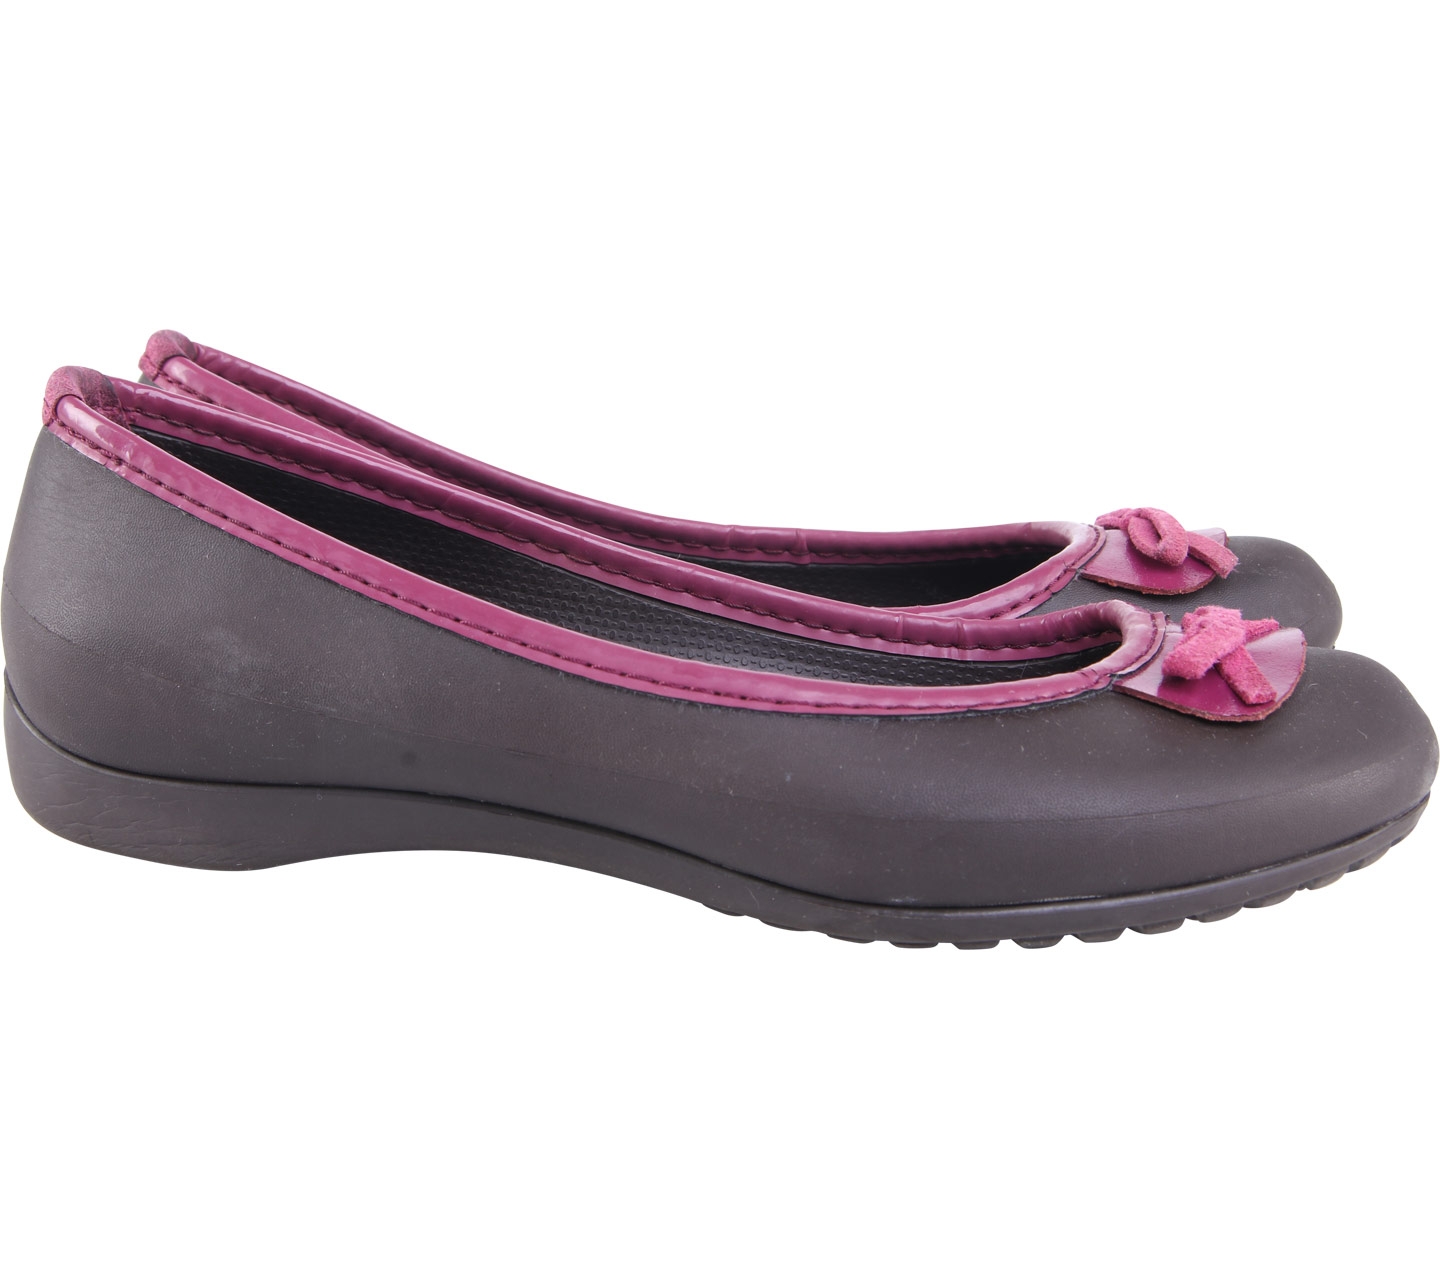 Crocs Brown And Purple Flats